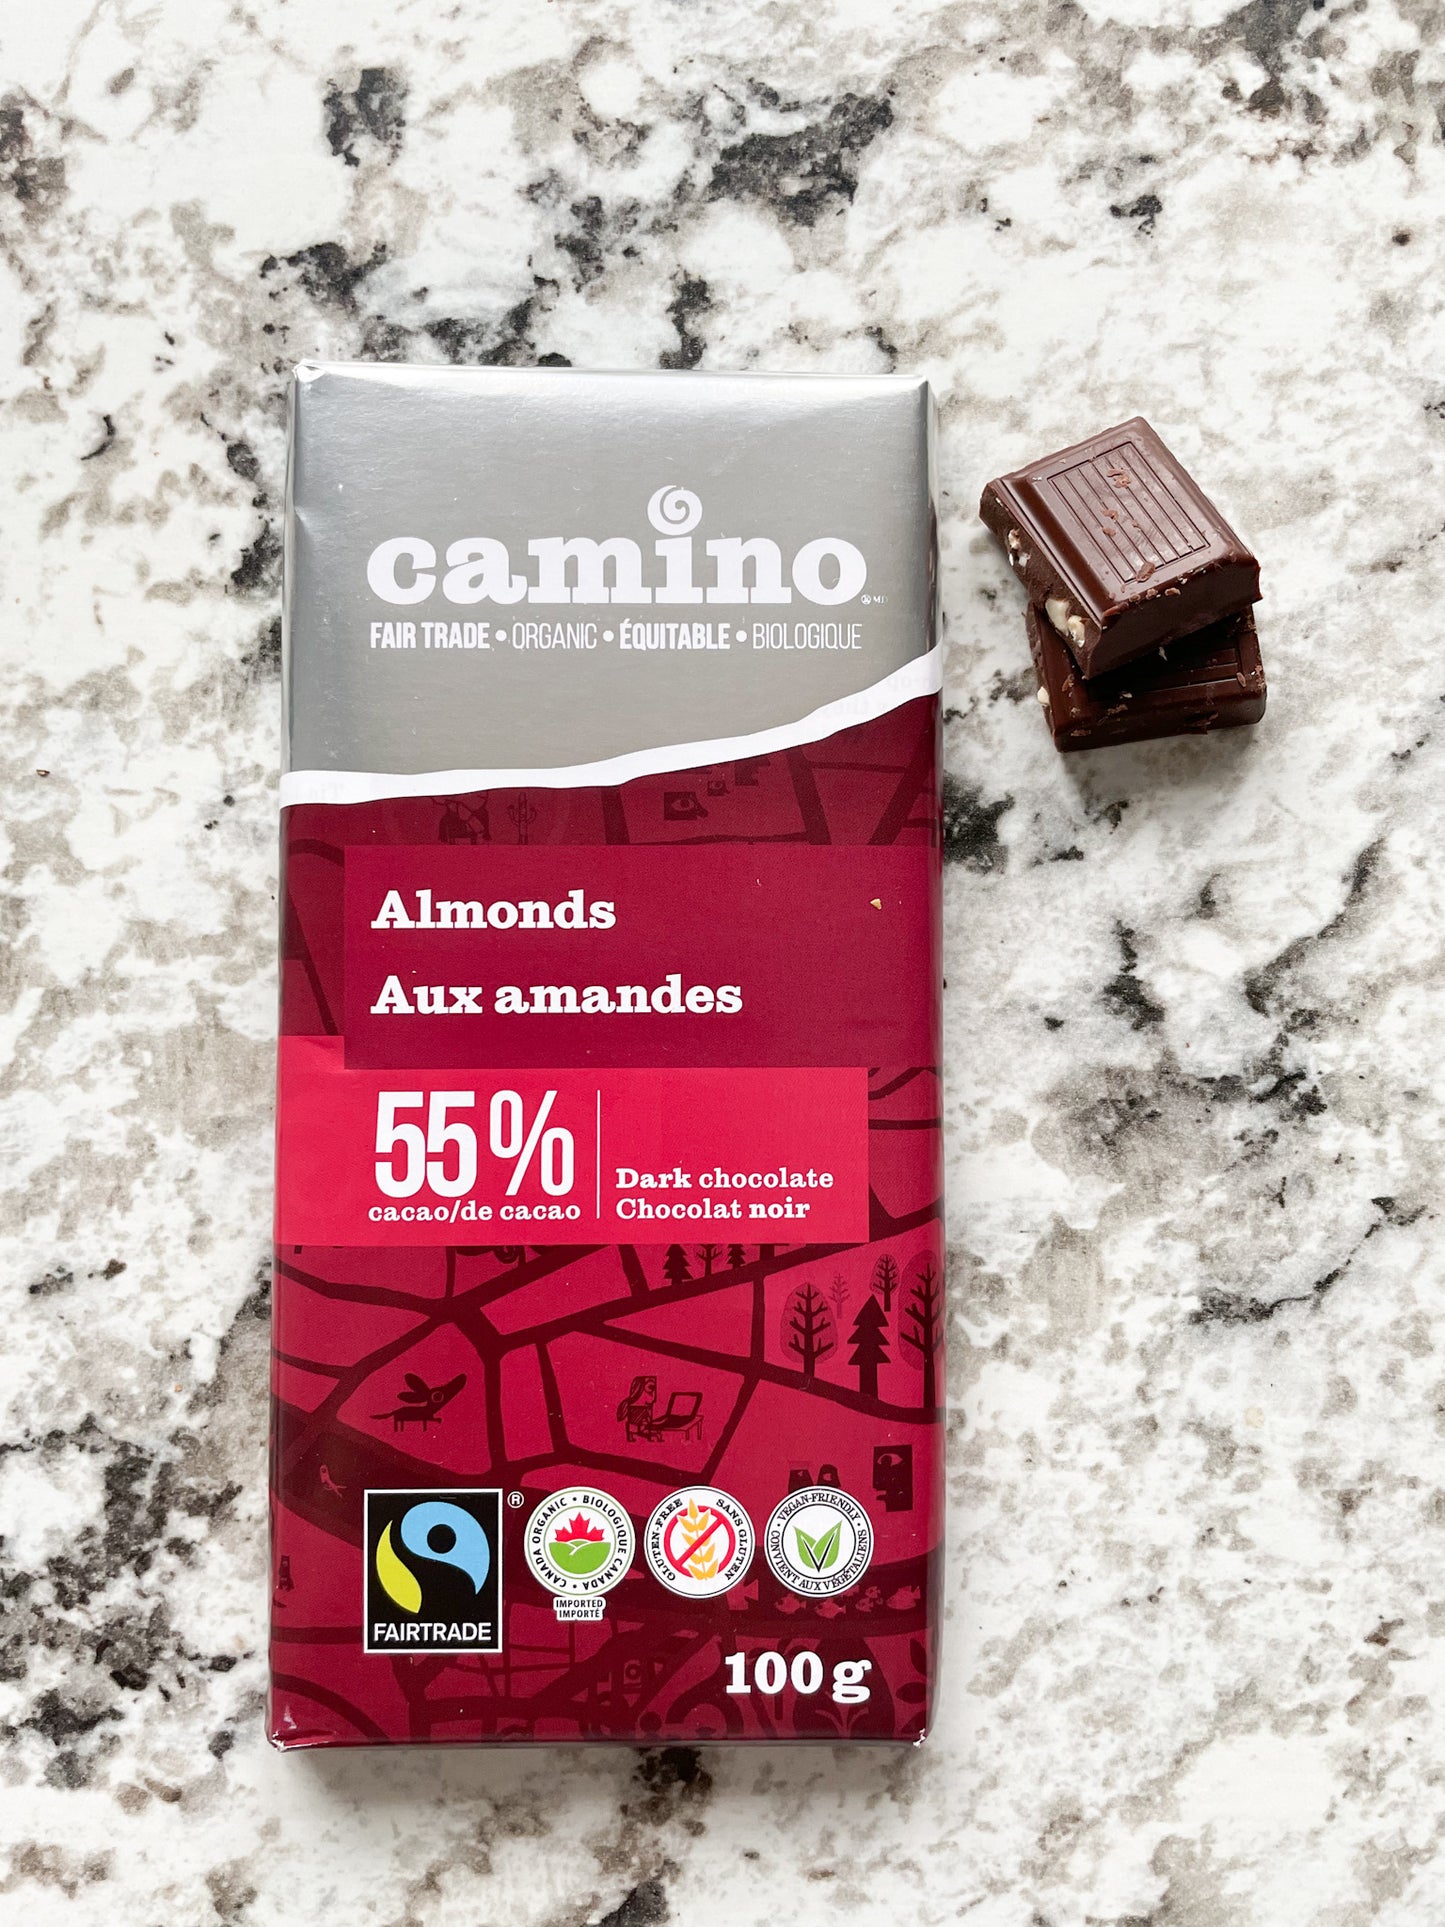 Camino Organic & Fair Trade Almonds (55% Cacao) Chocolate Bar